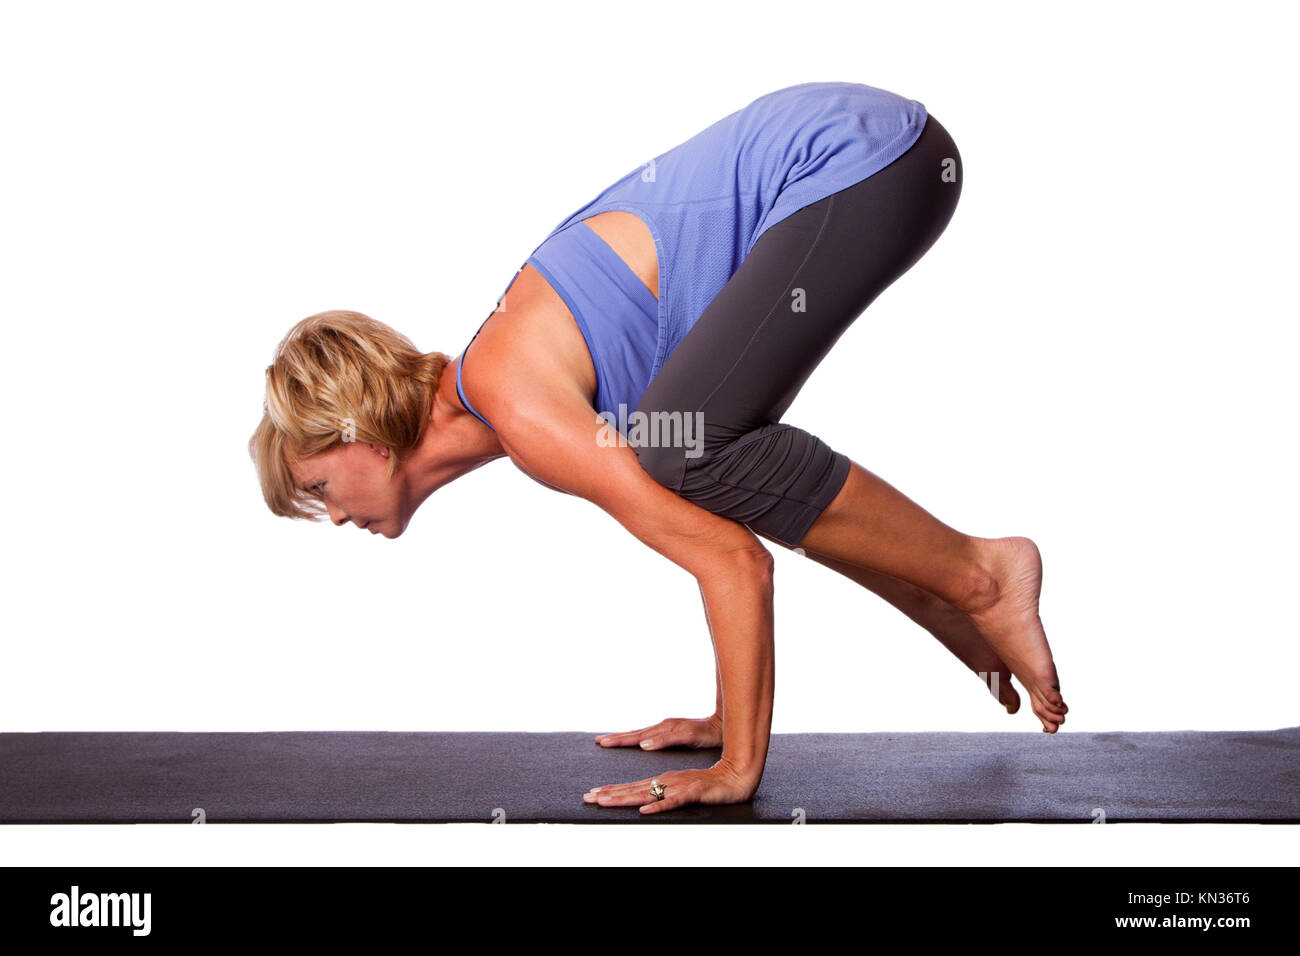 Crow pose (bakasana) in yoga: How to perform it?